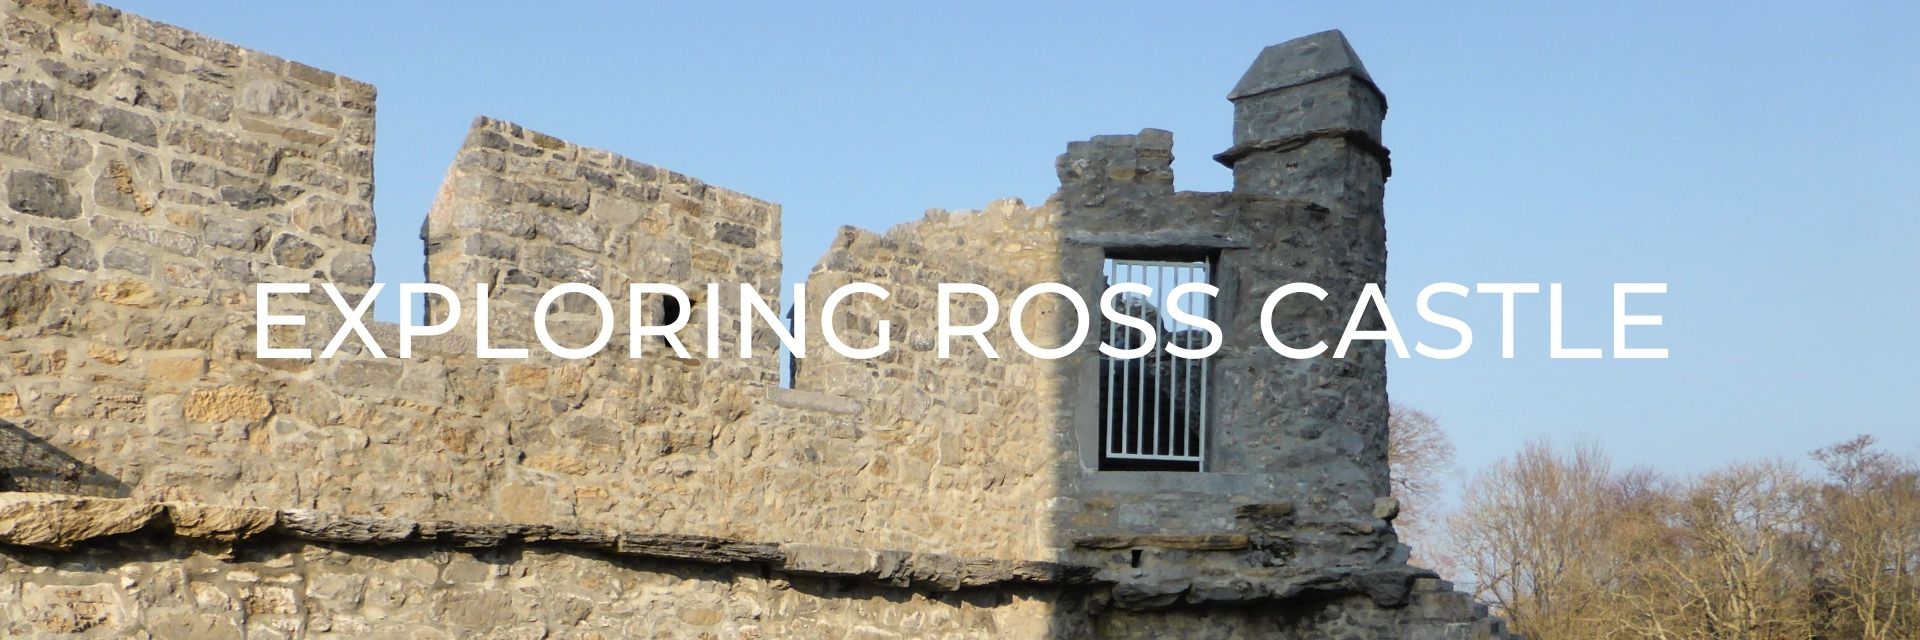 Exploring Ross Castle Desktop Header